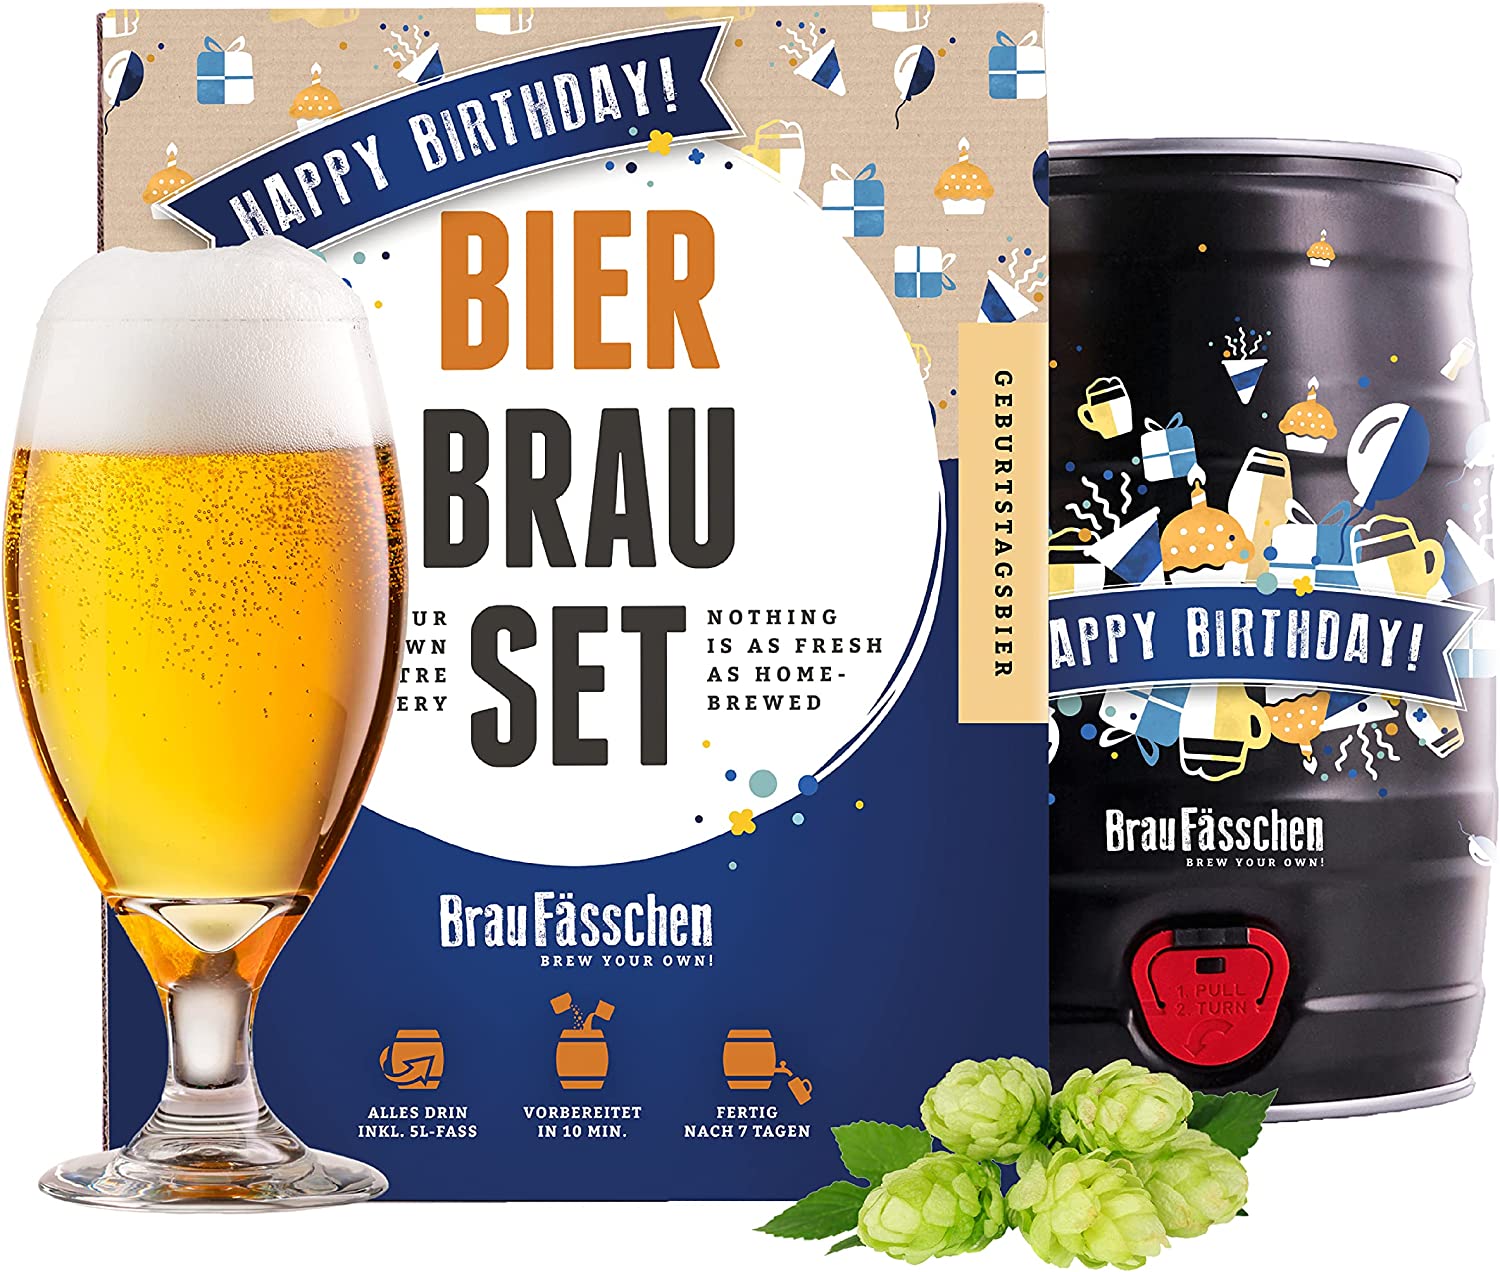 Beer Brewing Set - BIRTHDAY BEER - to brew yourself